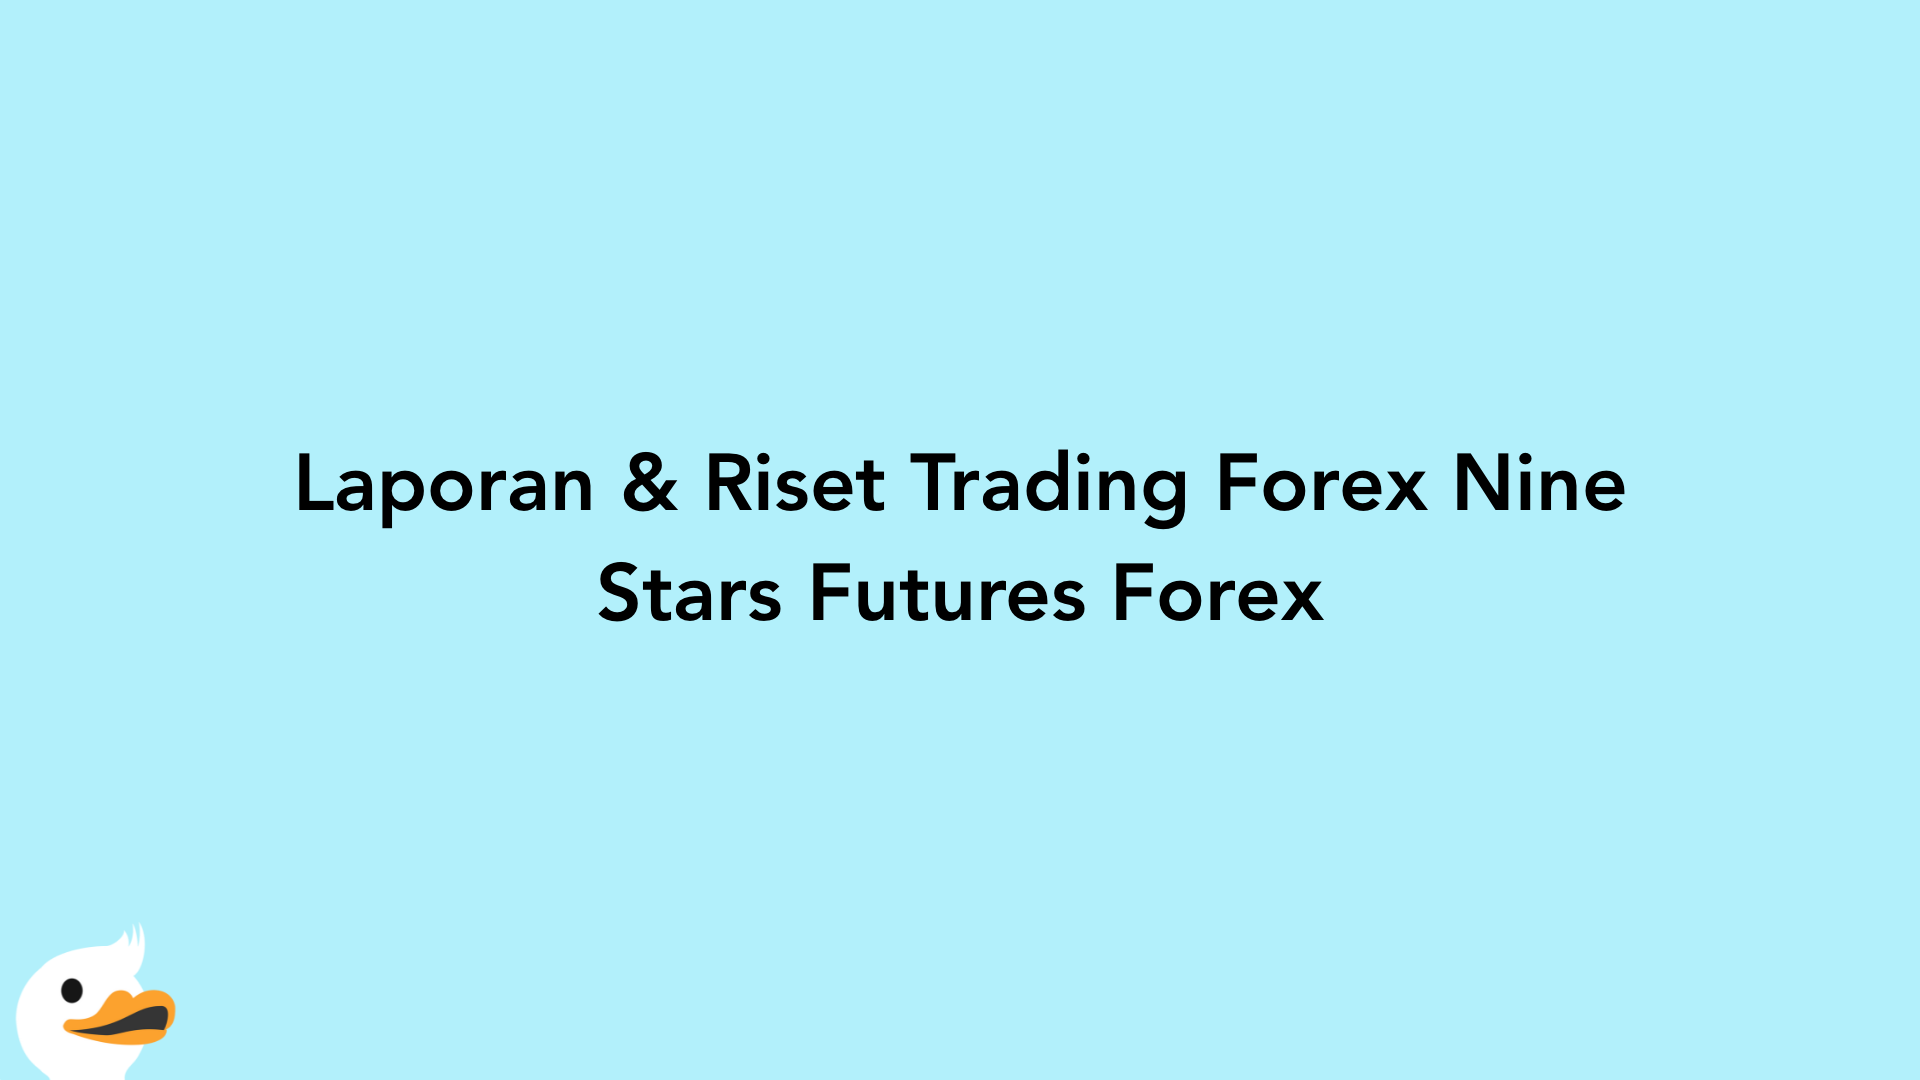 Laporan & Riset Trading Forex Nine Stars Futures Forex